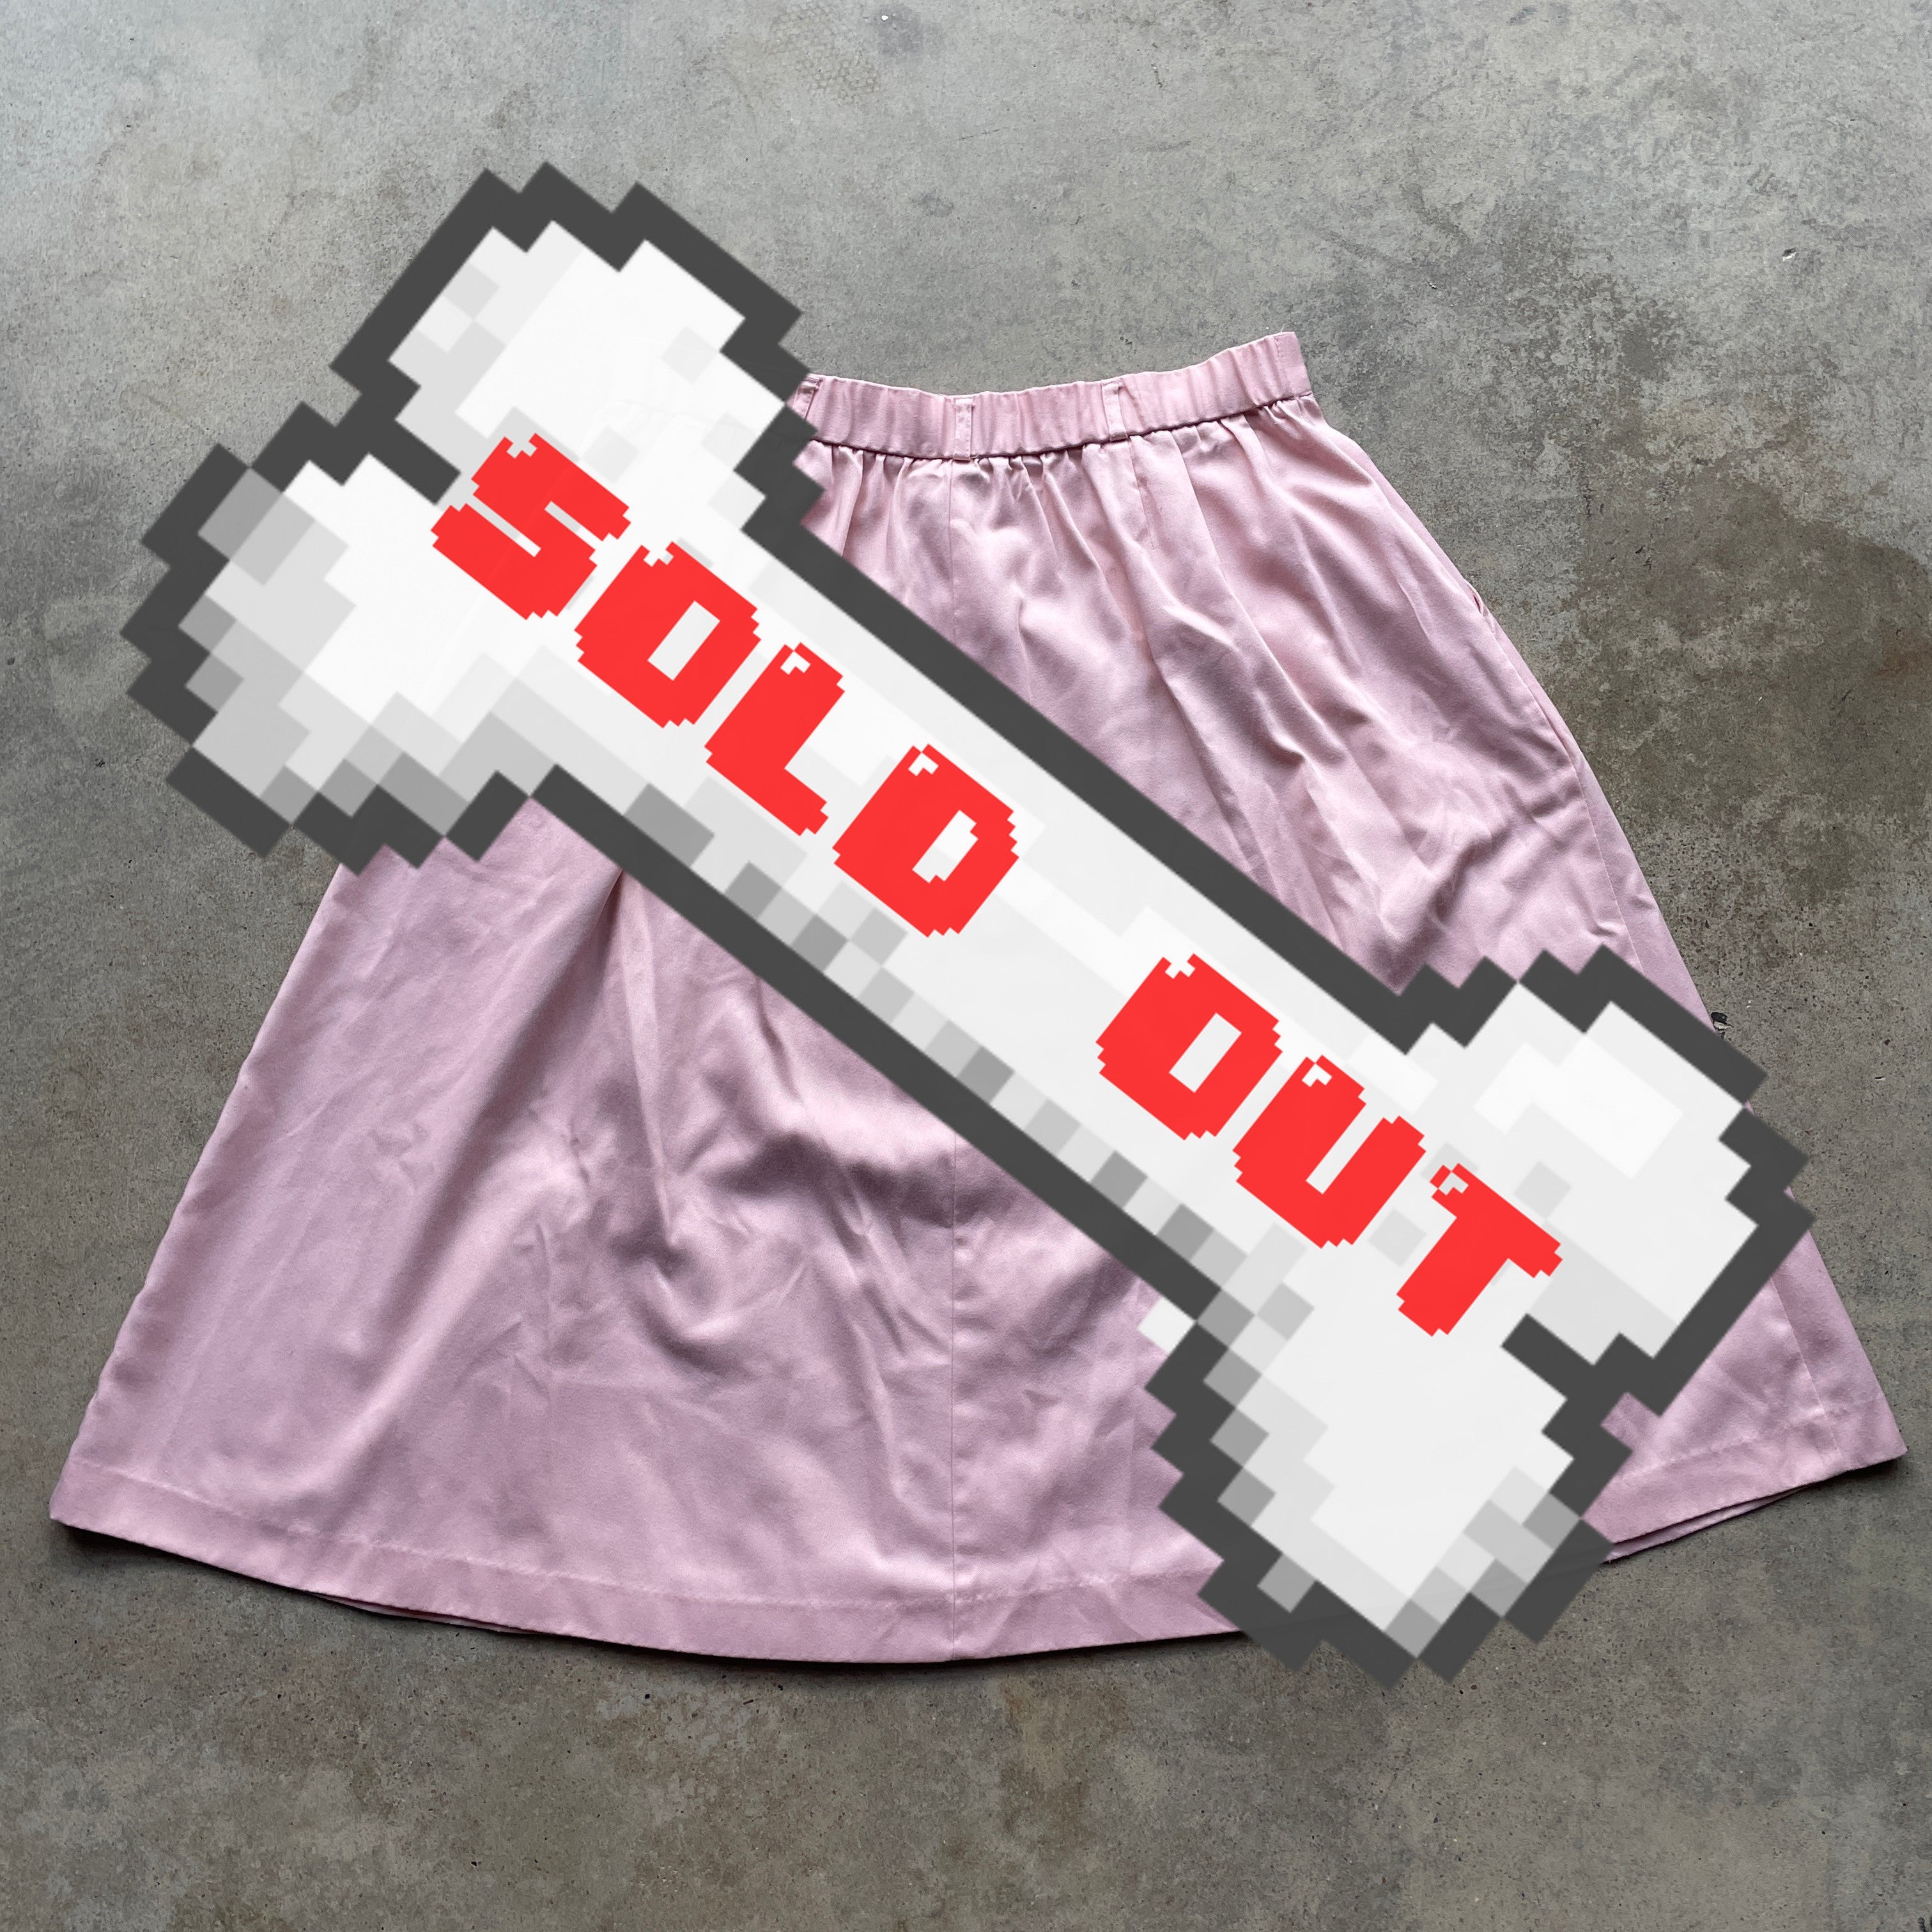 1980s Vintage Baby Pink “Koret” Buttonet Circle Skirt